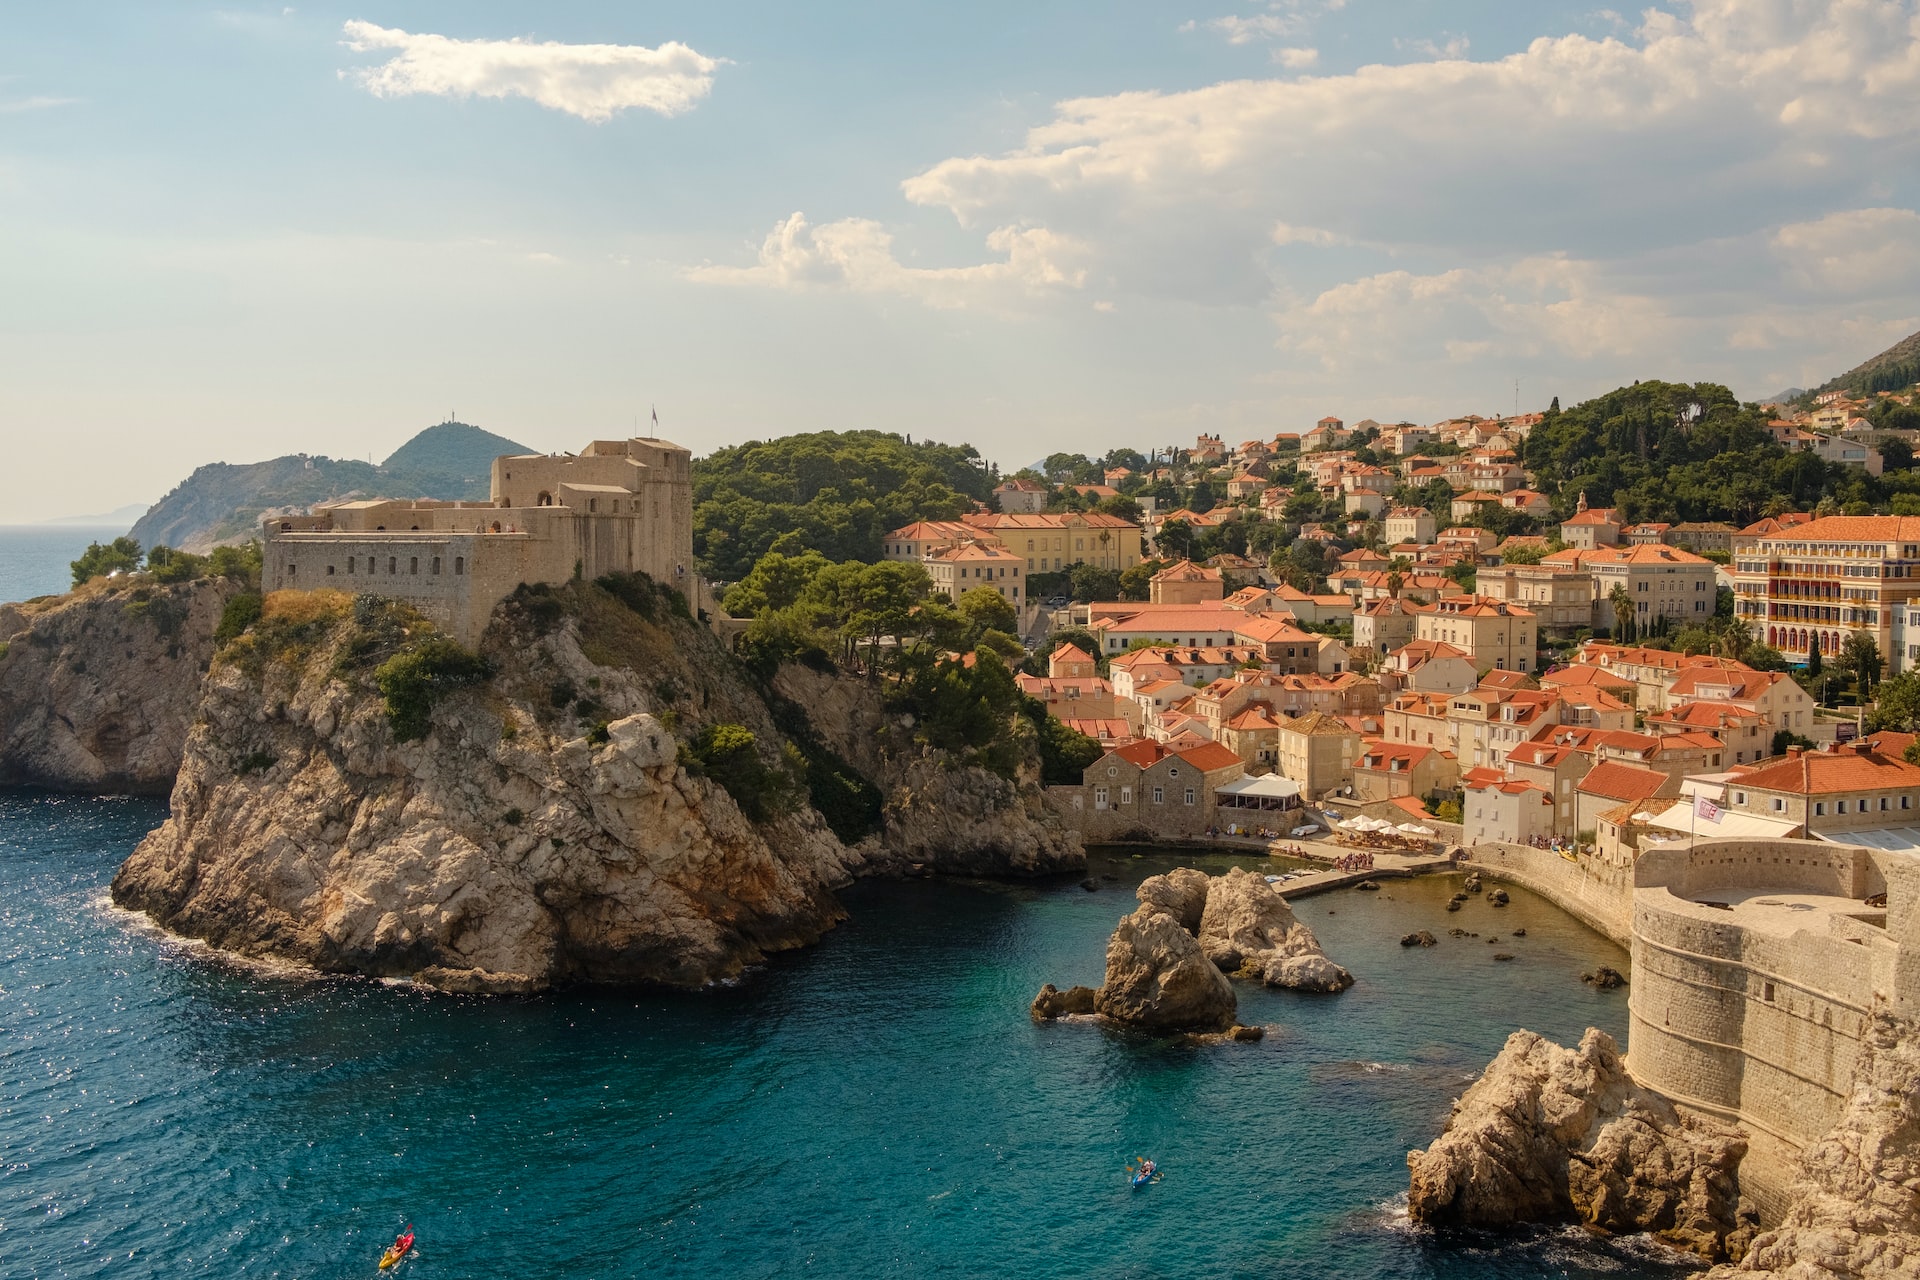 Dubrovnik, Croatia is one of the best cities to visit in Eastern Europe